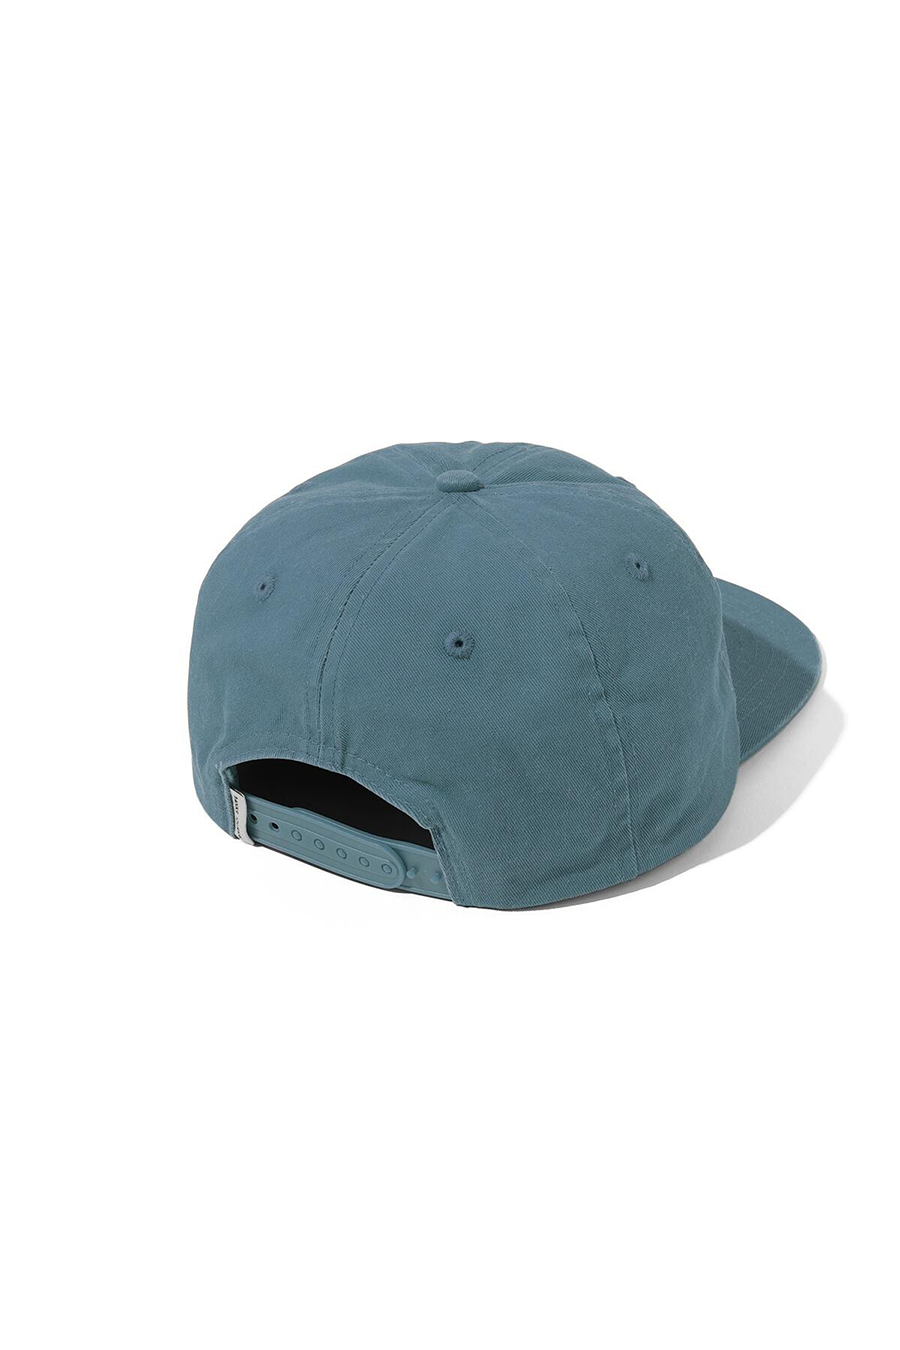 Label Hat | Atlantic - Main Image Number 2 of 2